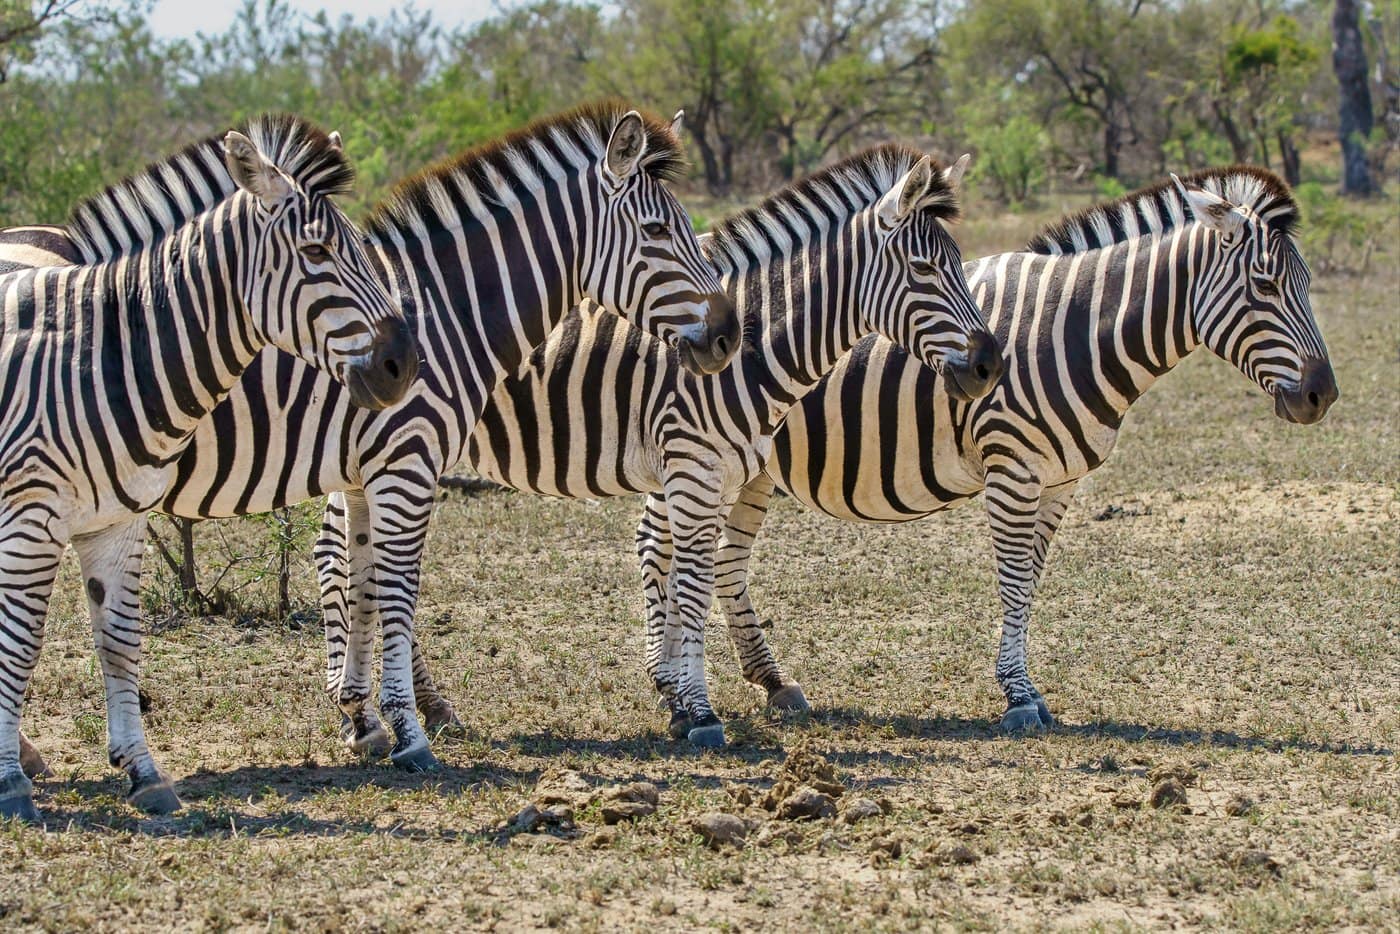 Adult zebras with stripes